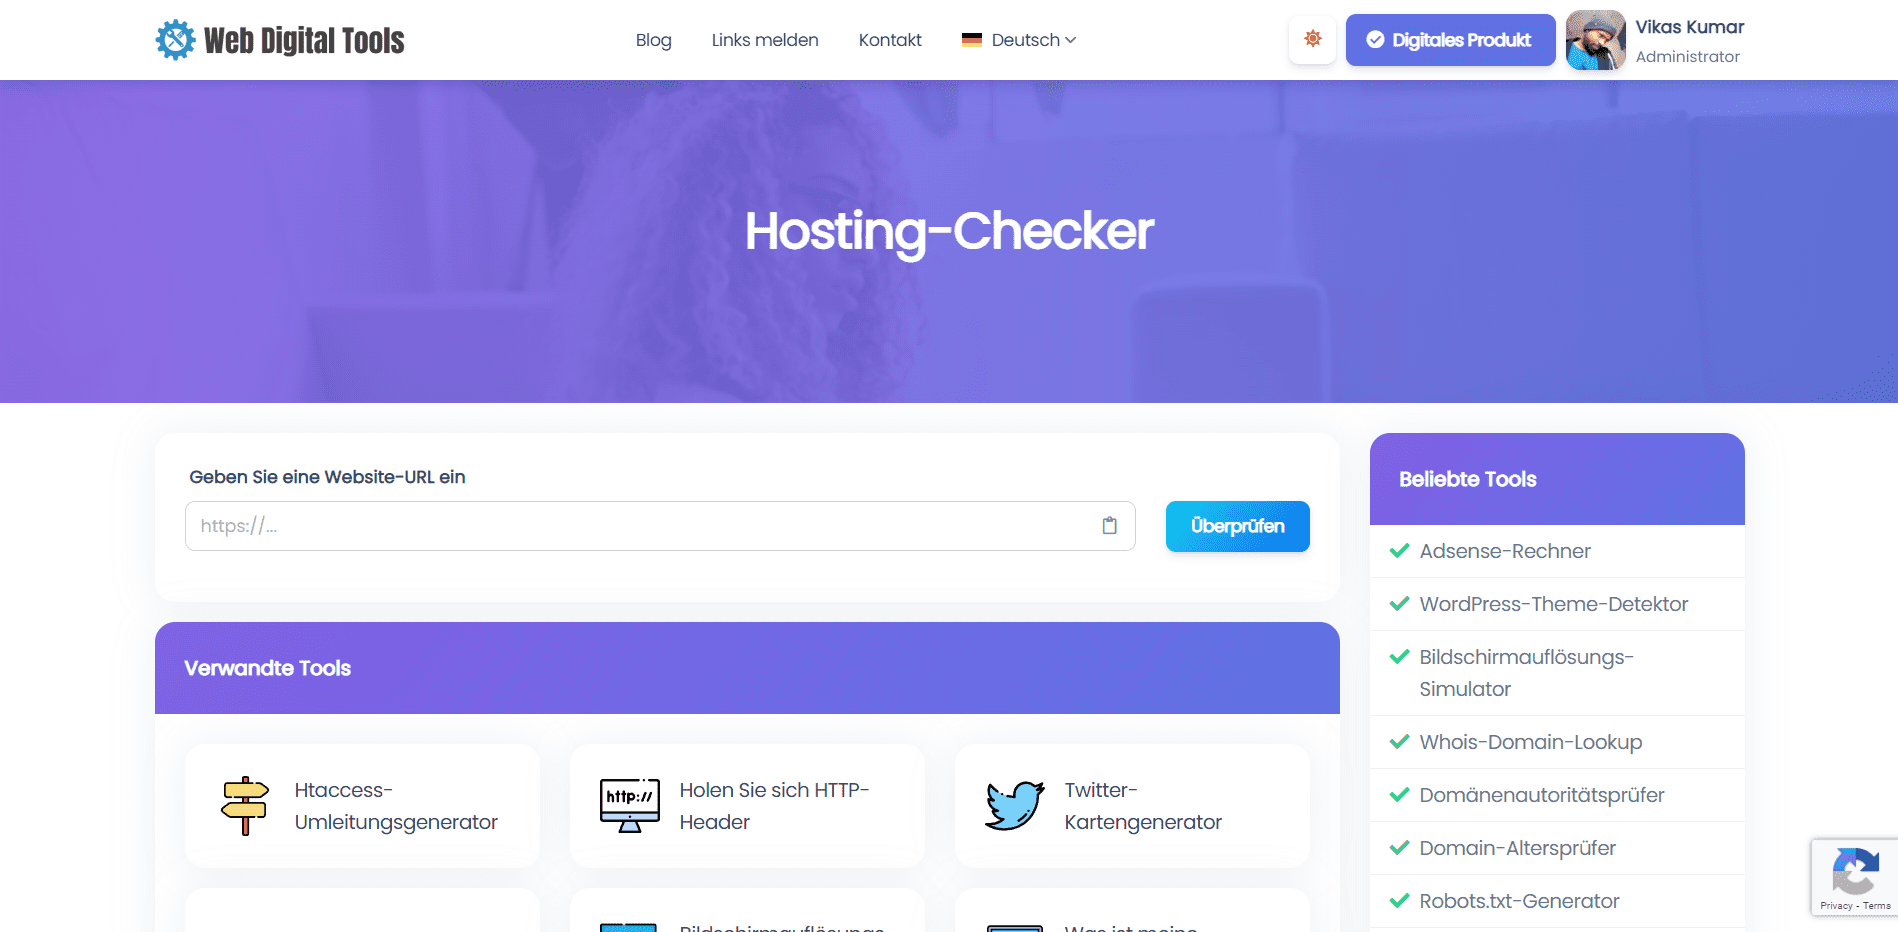 Hosting-Checker